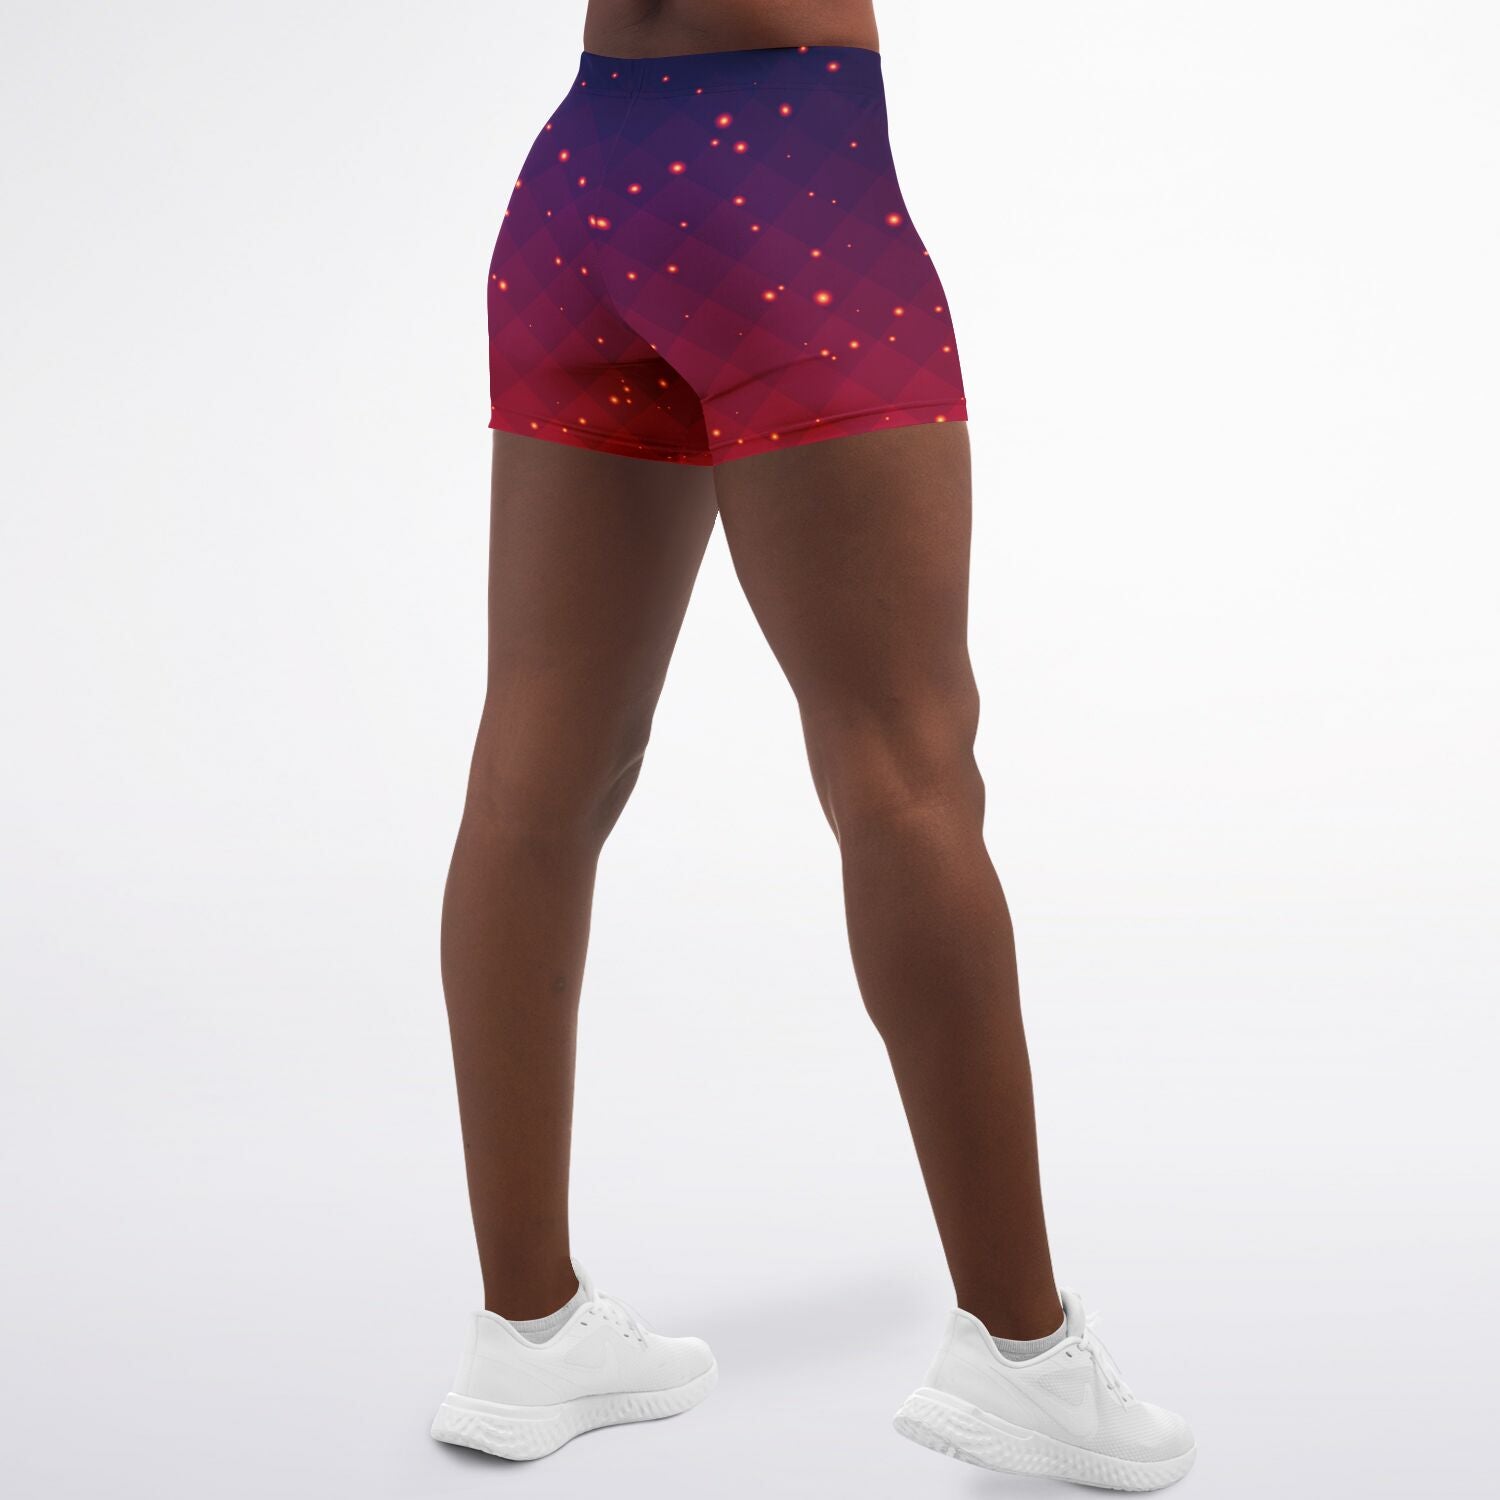 Women's Mid-rise Geometric Fire Flies Pattern Athletic Booty Shorts